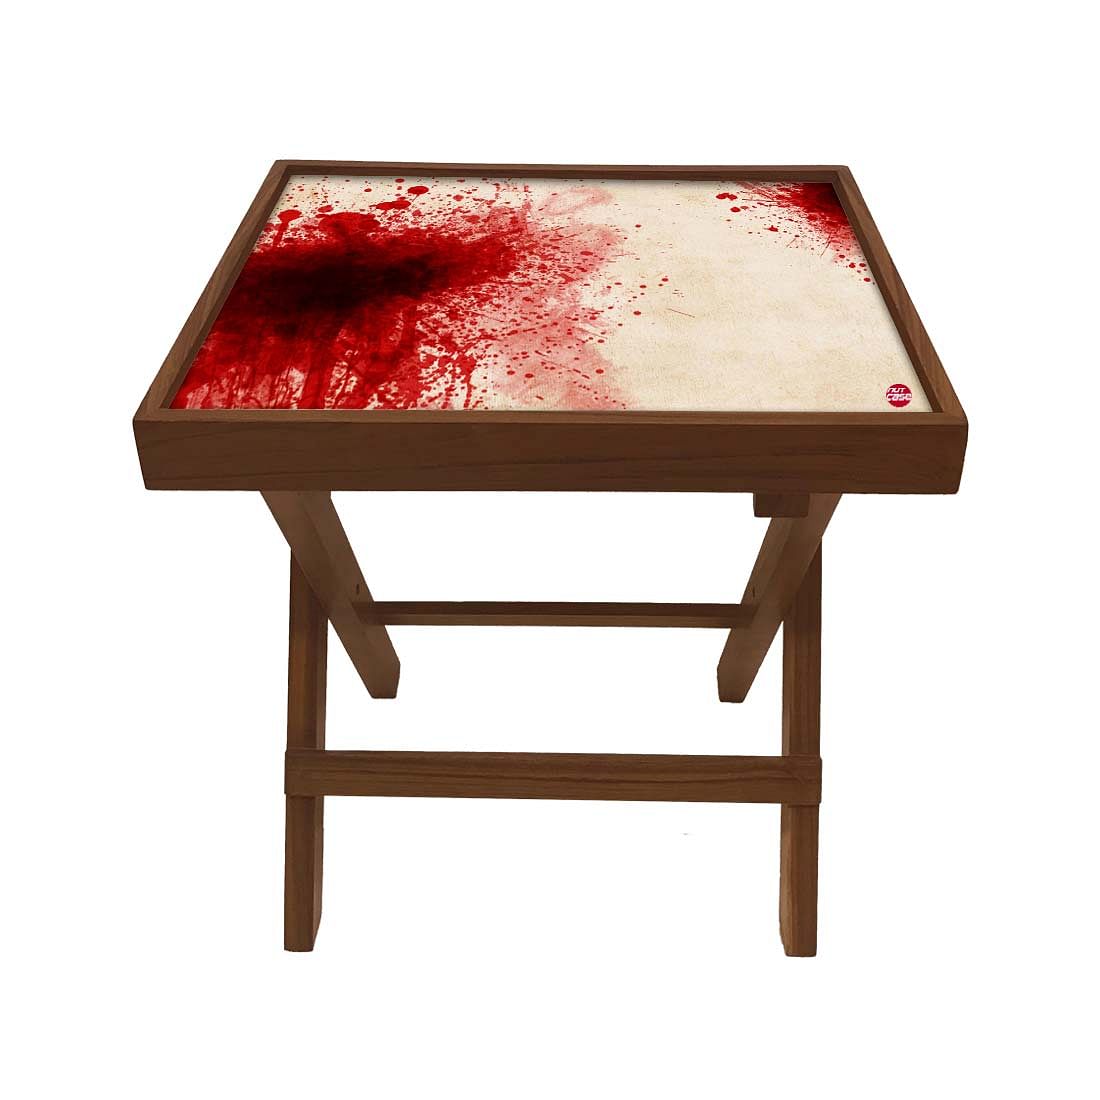 Folding Side Table - Teak Wood - Crime Scene Nutcase